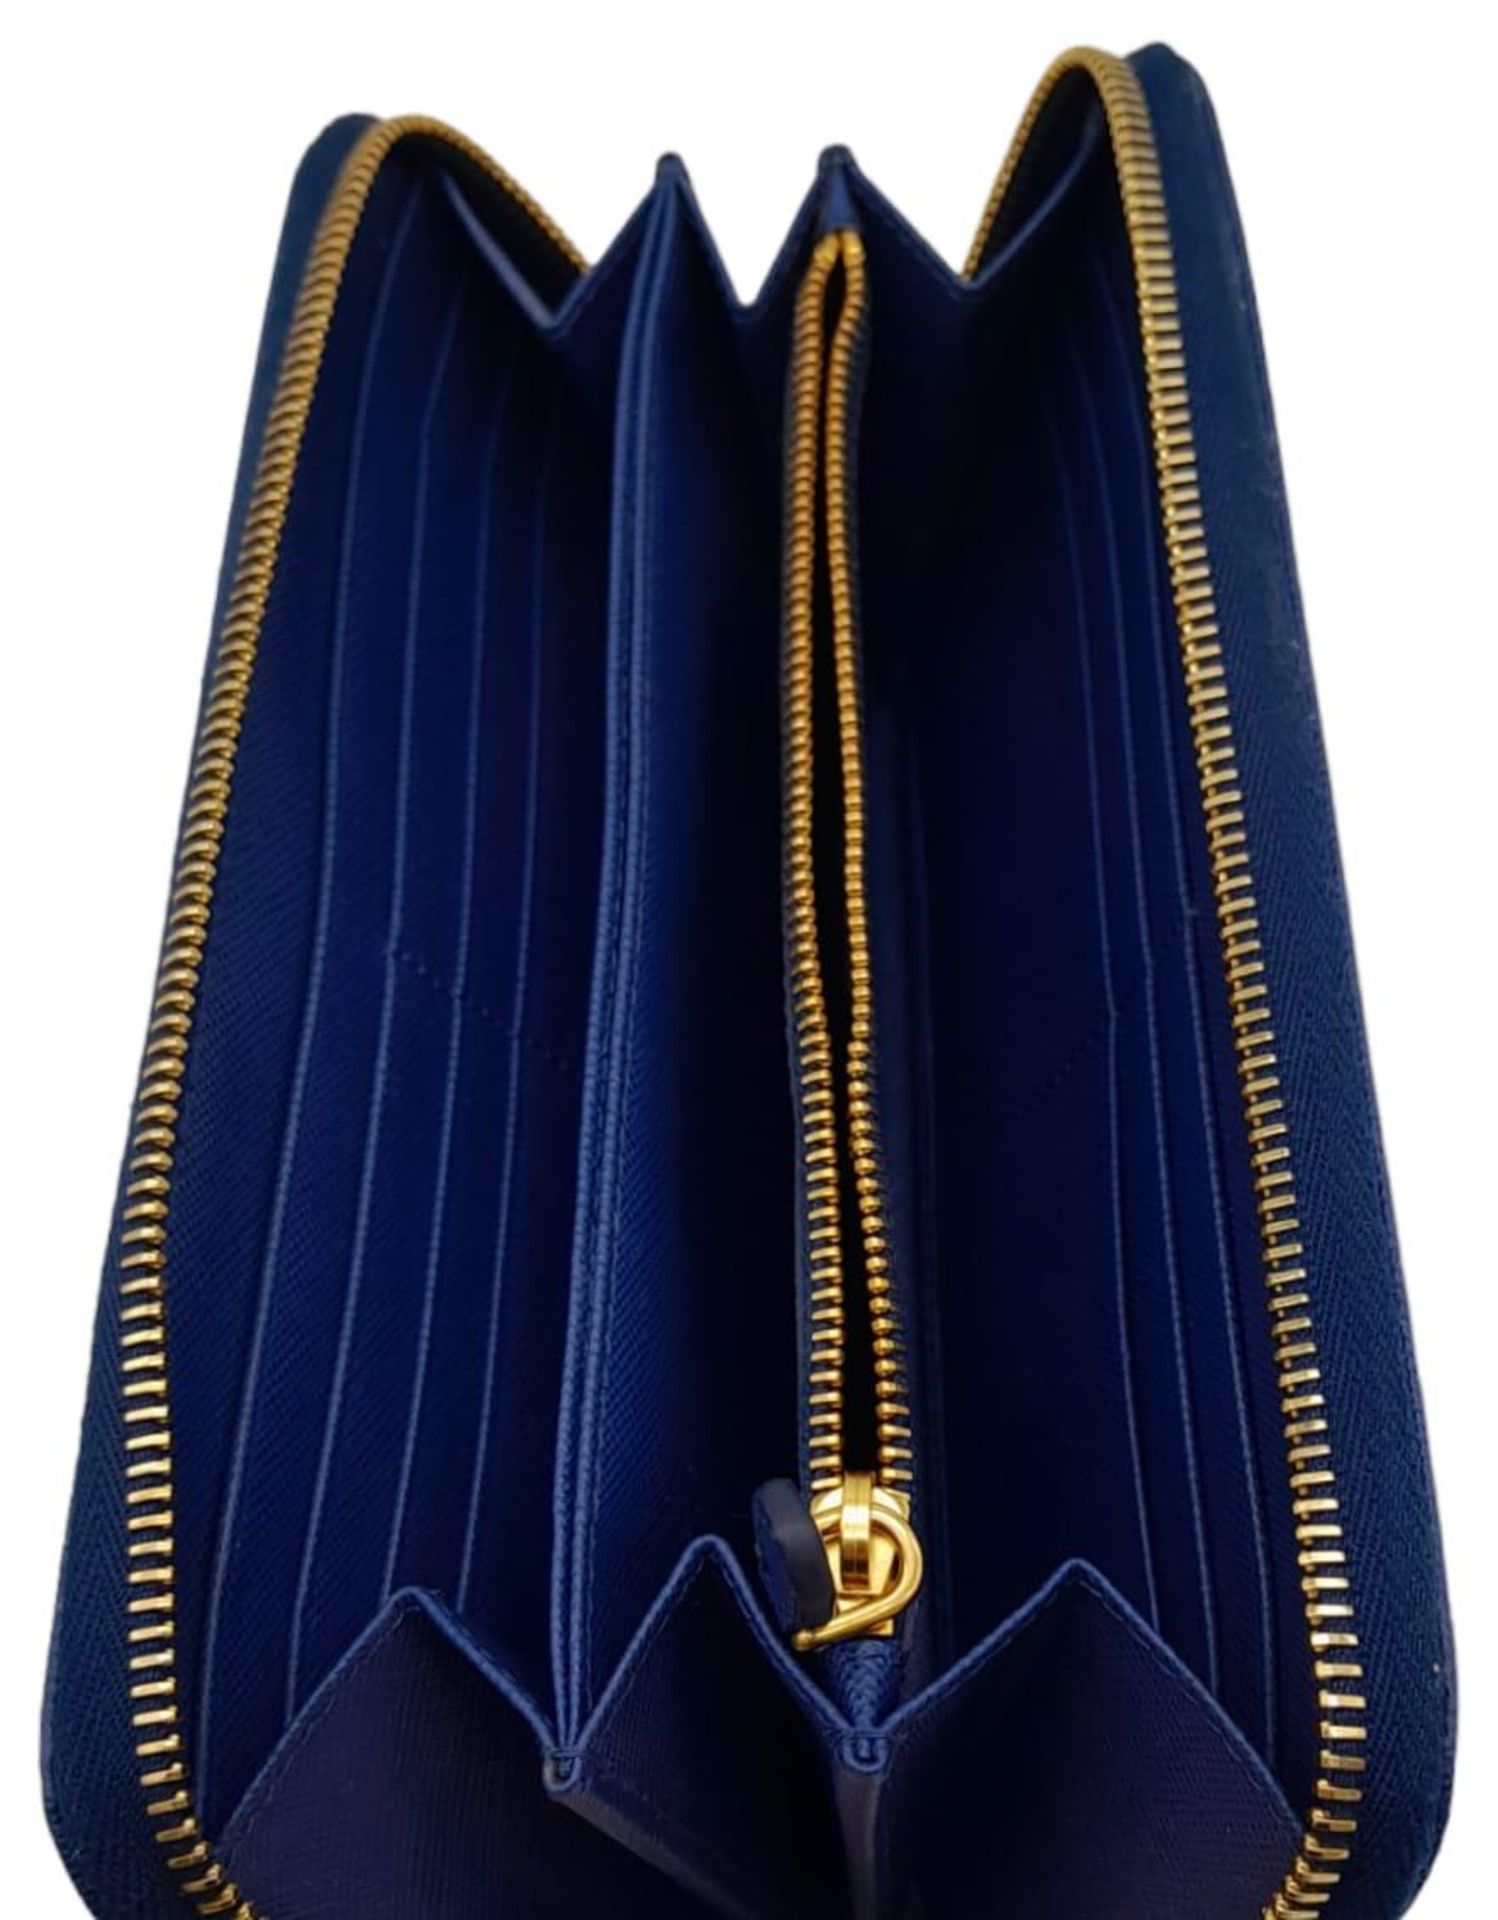 A Prada Royal Blue Purse/Wallet. Saffiano leather exterior, with the Prada logo in gold-toned - Bild 3 aus 7